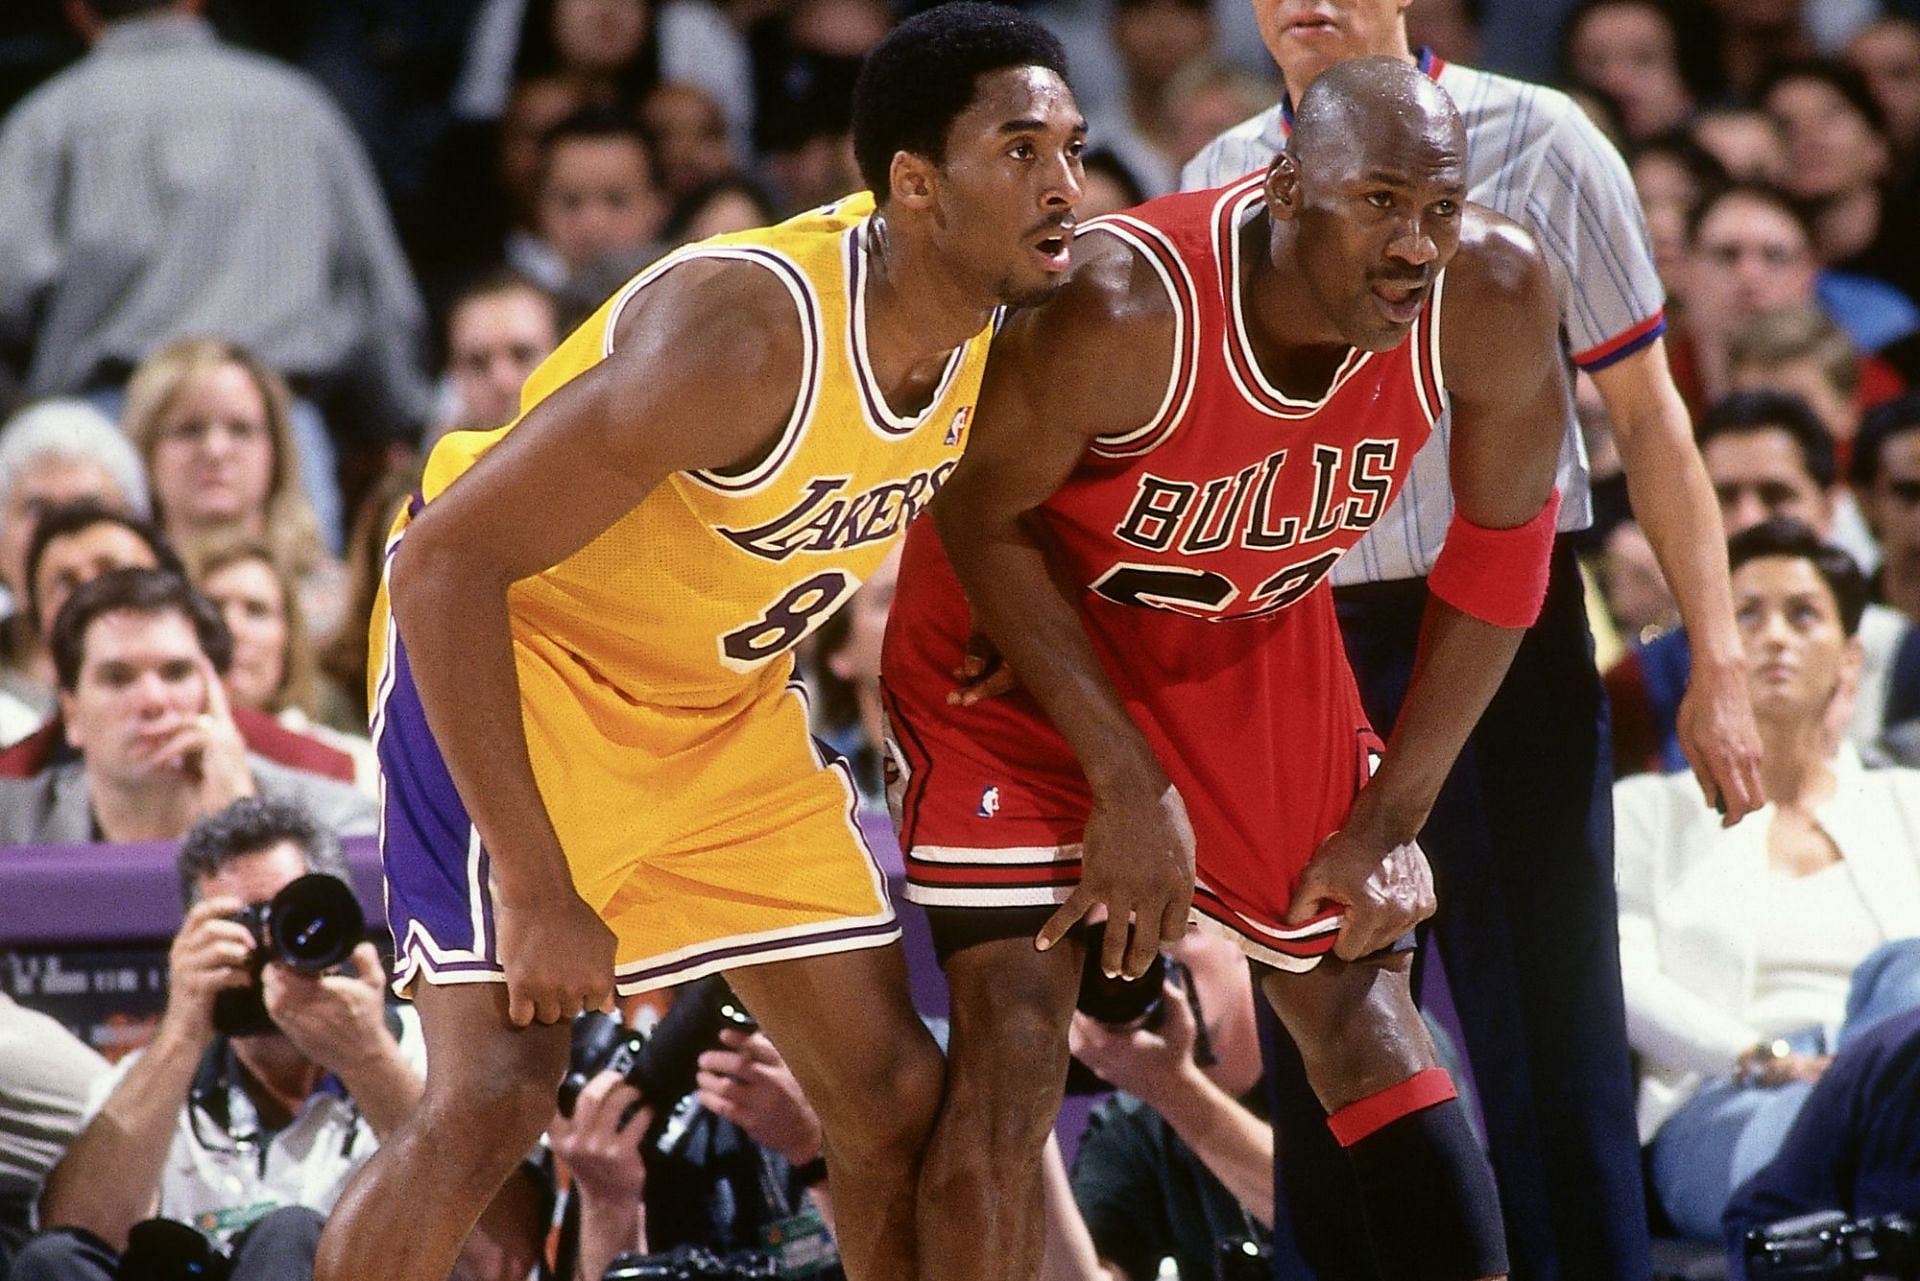 Kobe Bryant overtook Michael Jordan for third place on the all-time NBA scoring list on December 14, 2014. [Photo: Bleacher Report]